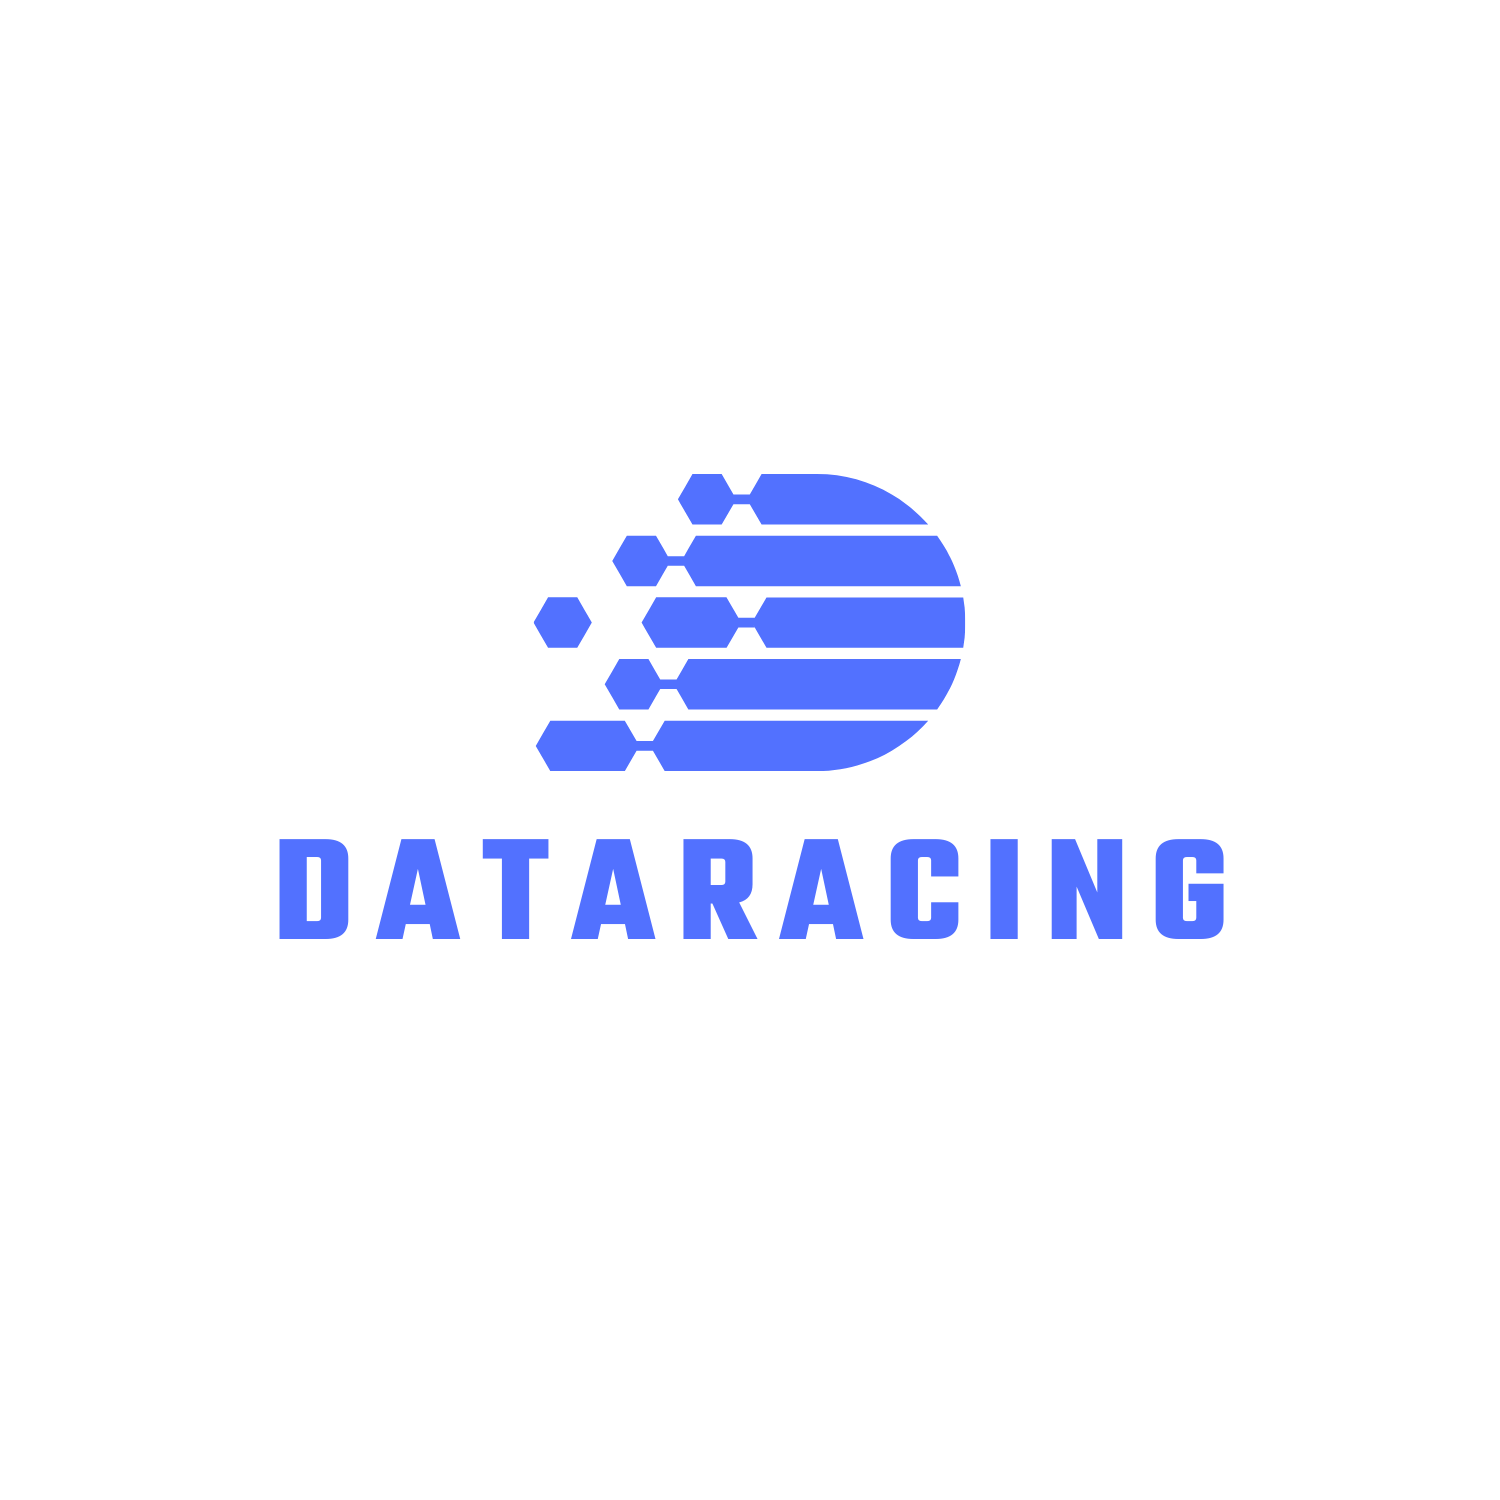 Dataracing